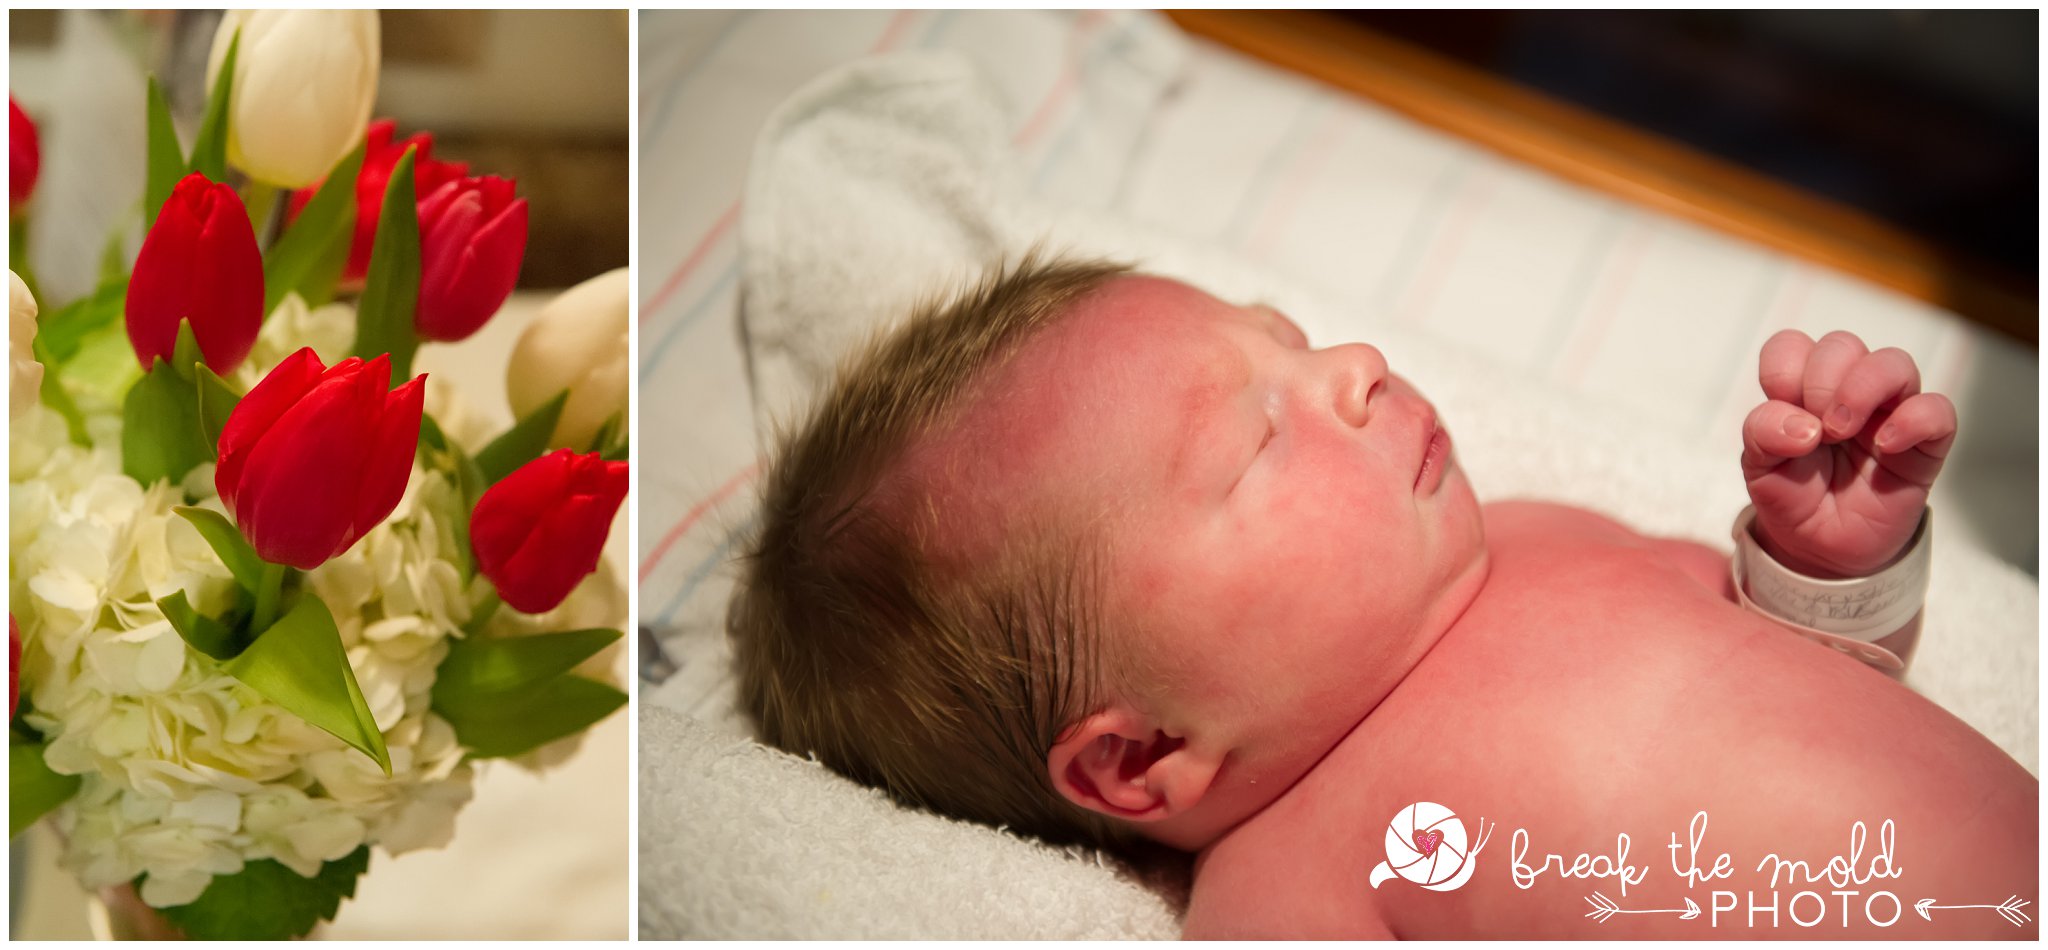 fresh-24-newborn-in-hospital-break-the-mold-photo-baby-girl-sweet-in-room-photos (17).jpg